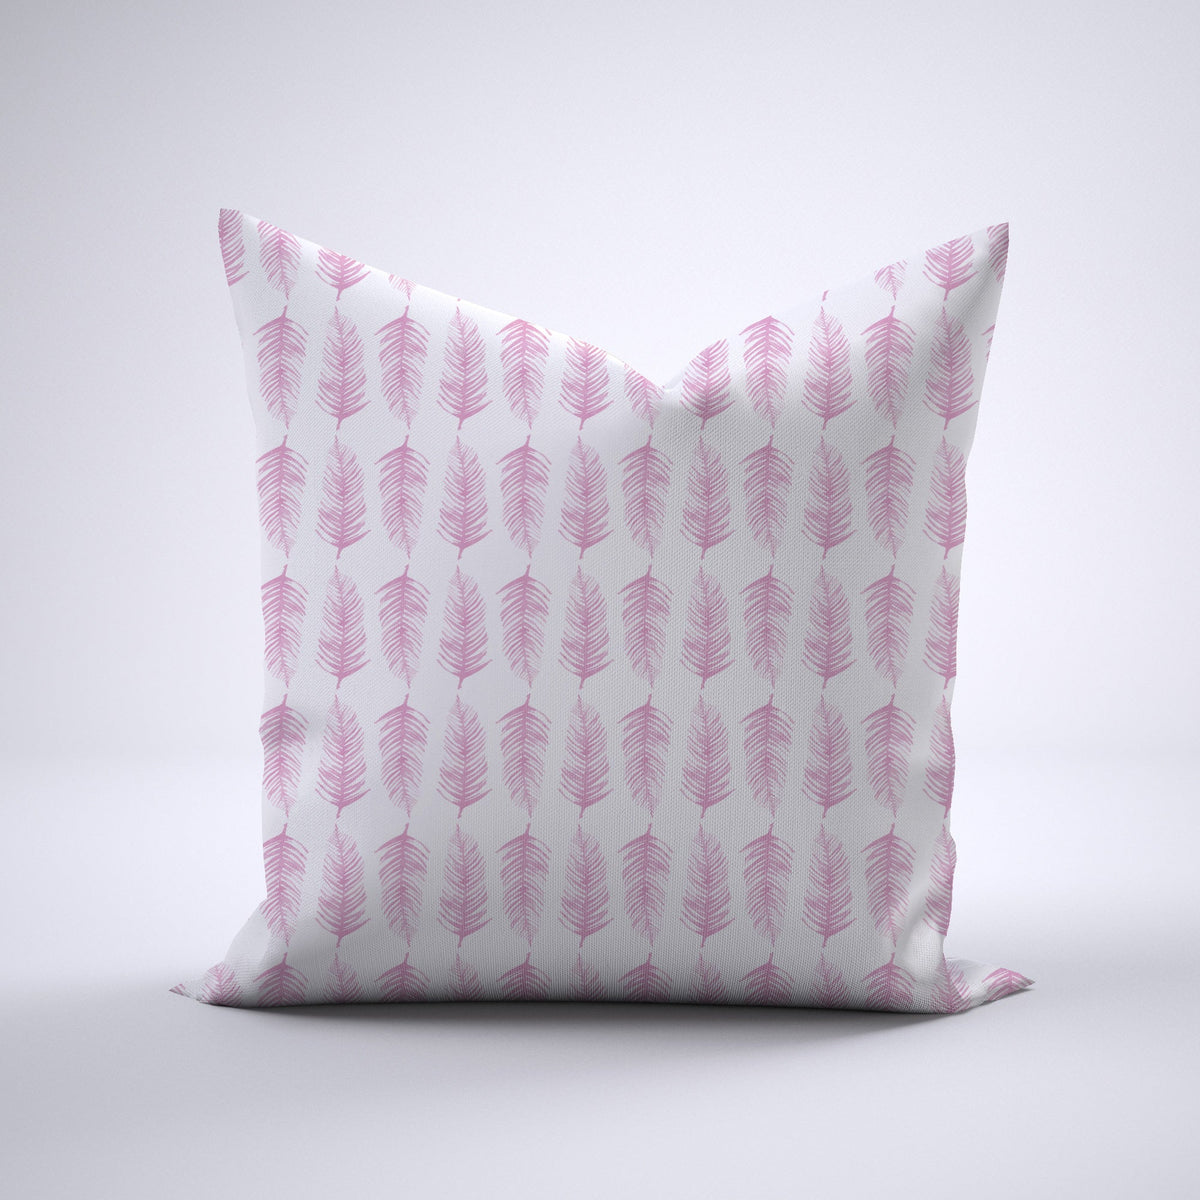 Throw Pillow - Plumes Hot Pink Bedding, Pillows, Throw Pillows MWW 